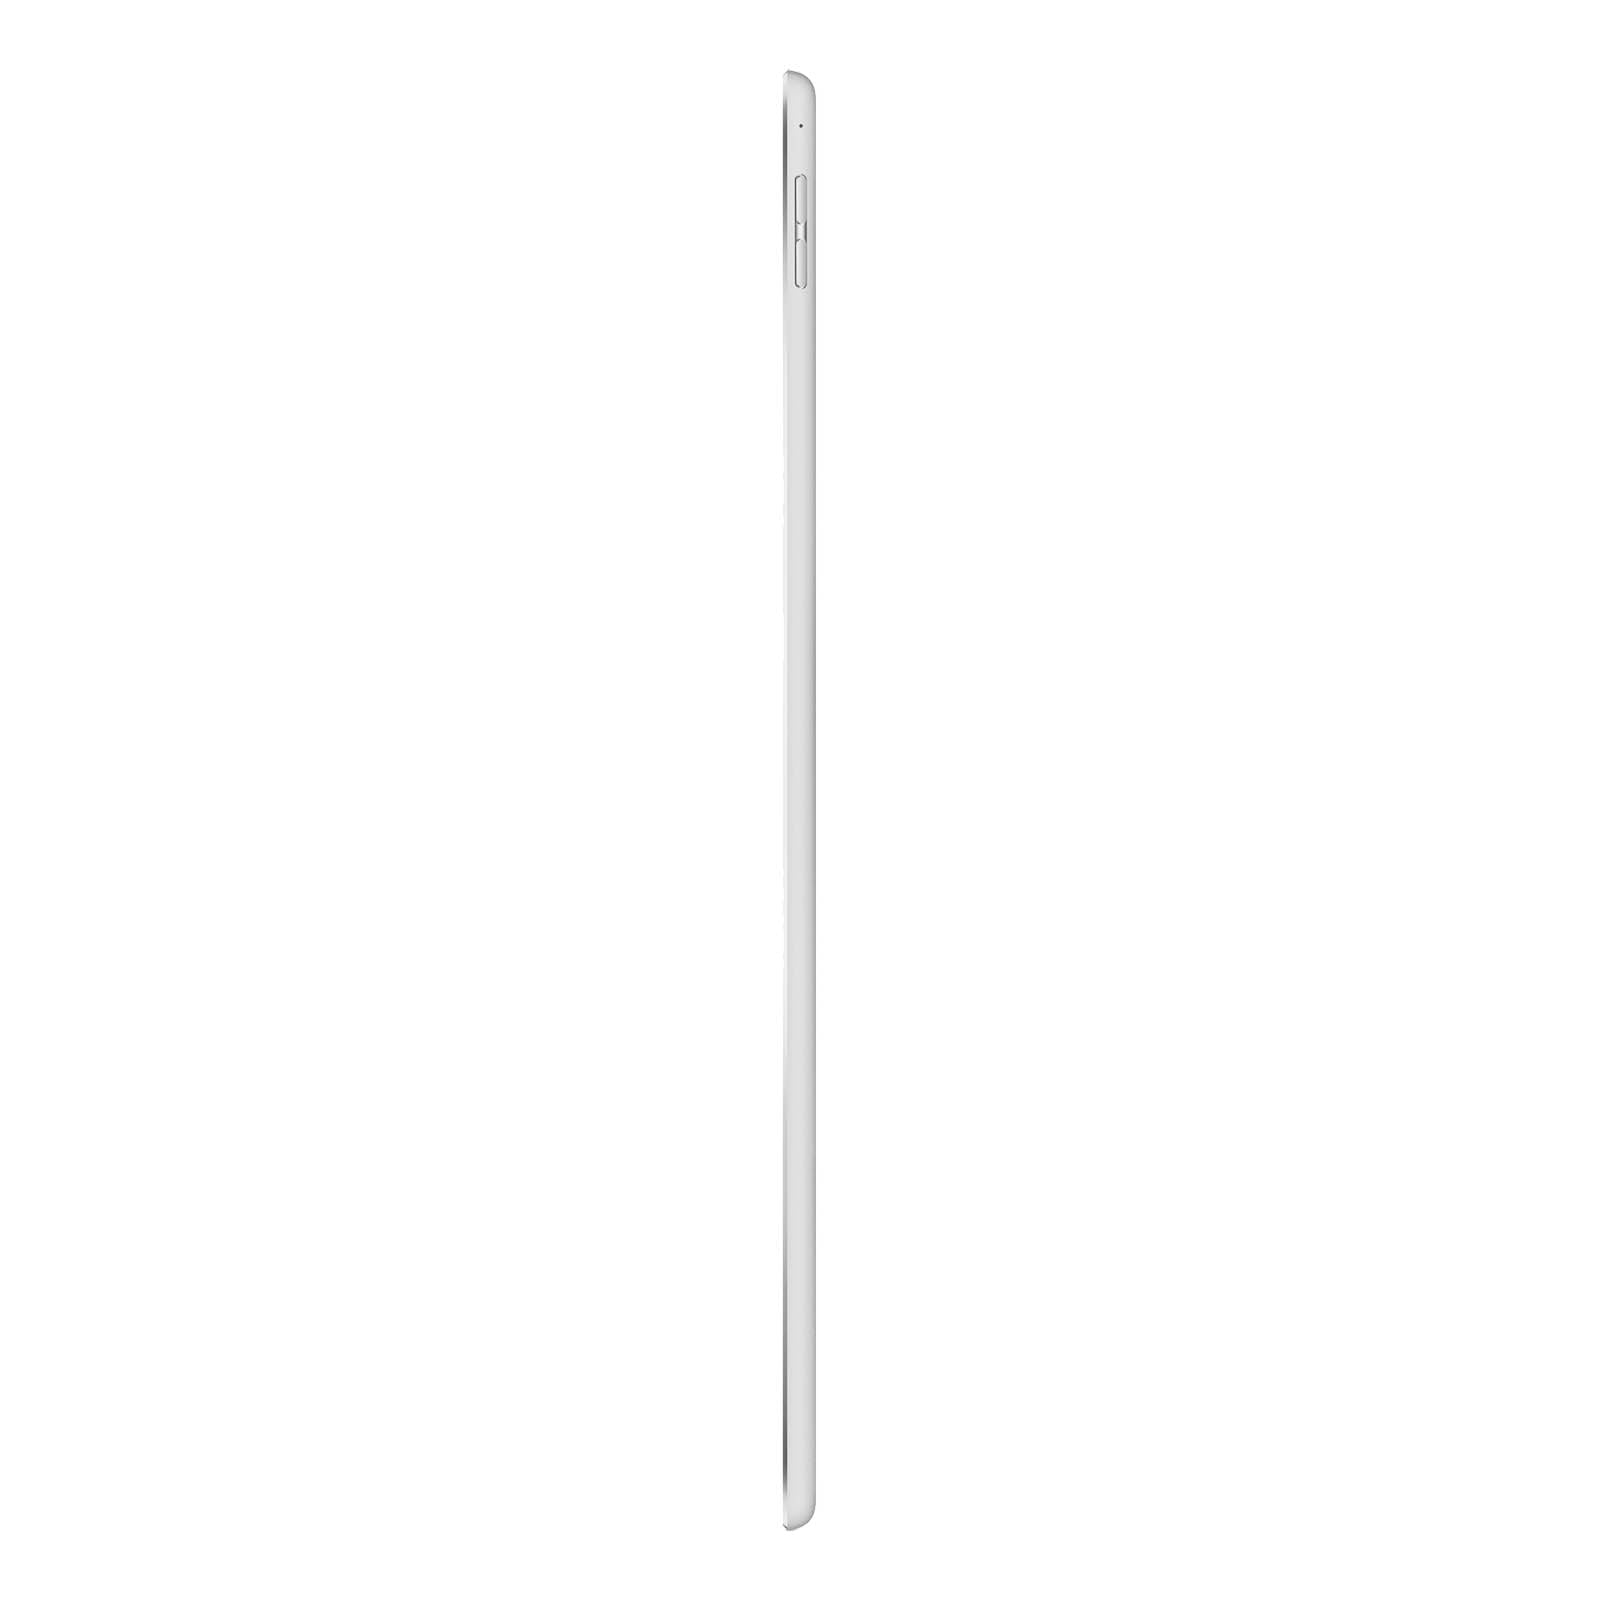 iPad Pro 12.9 Inch 3rd Gen 1TB Silver Good - Unlocked